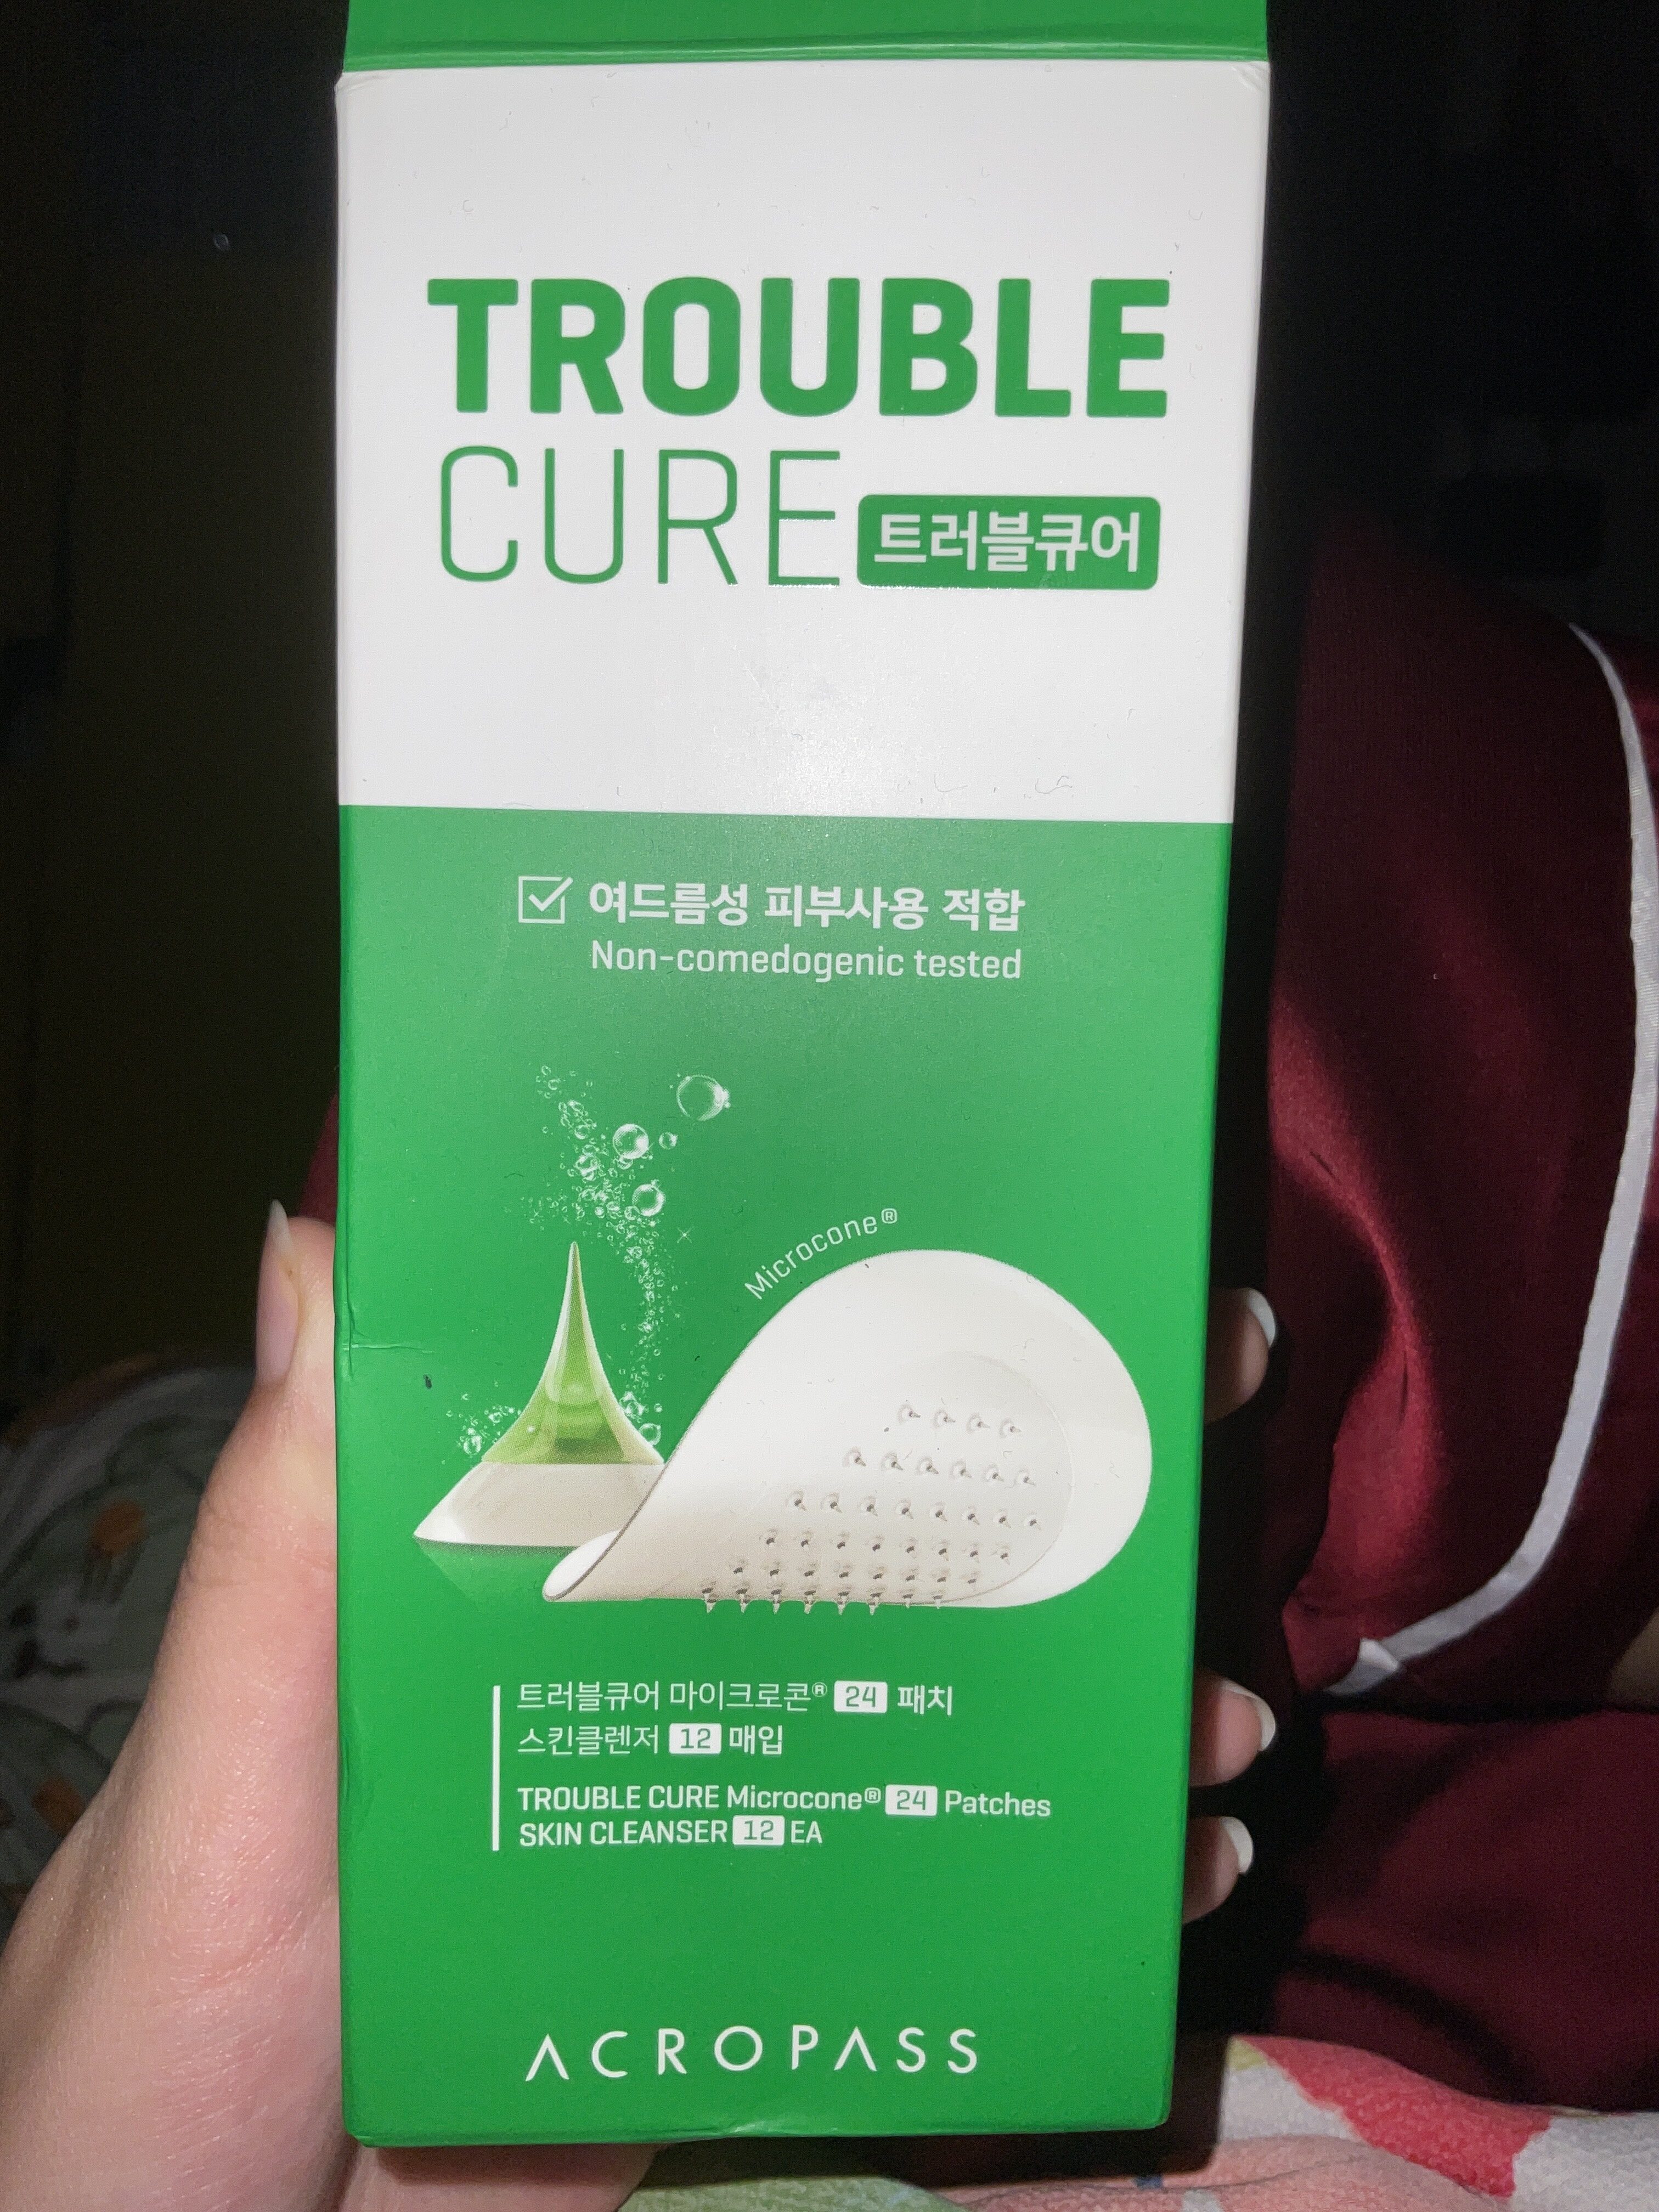 Trouble Cure Pimple Patch - Product